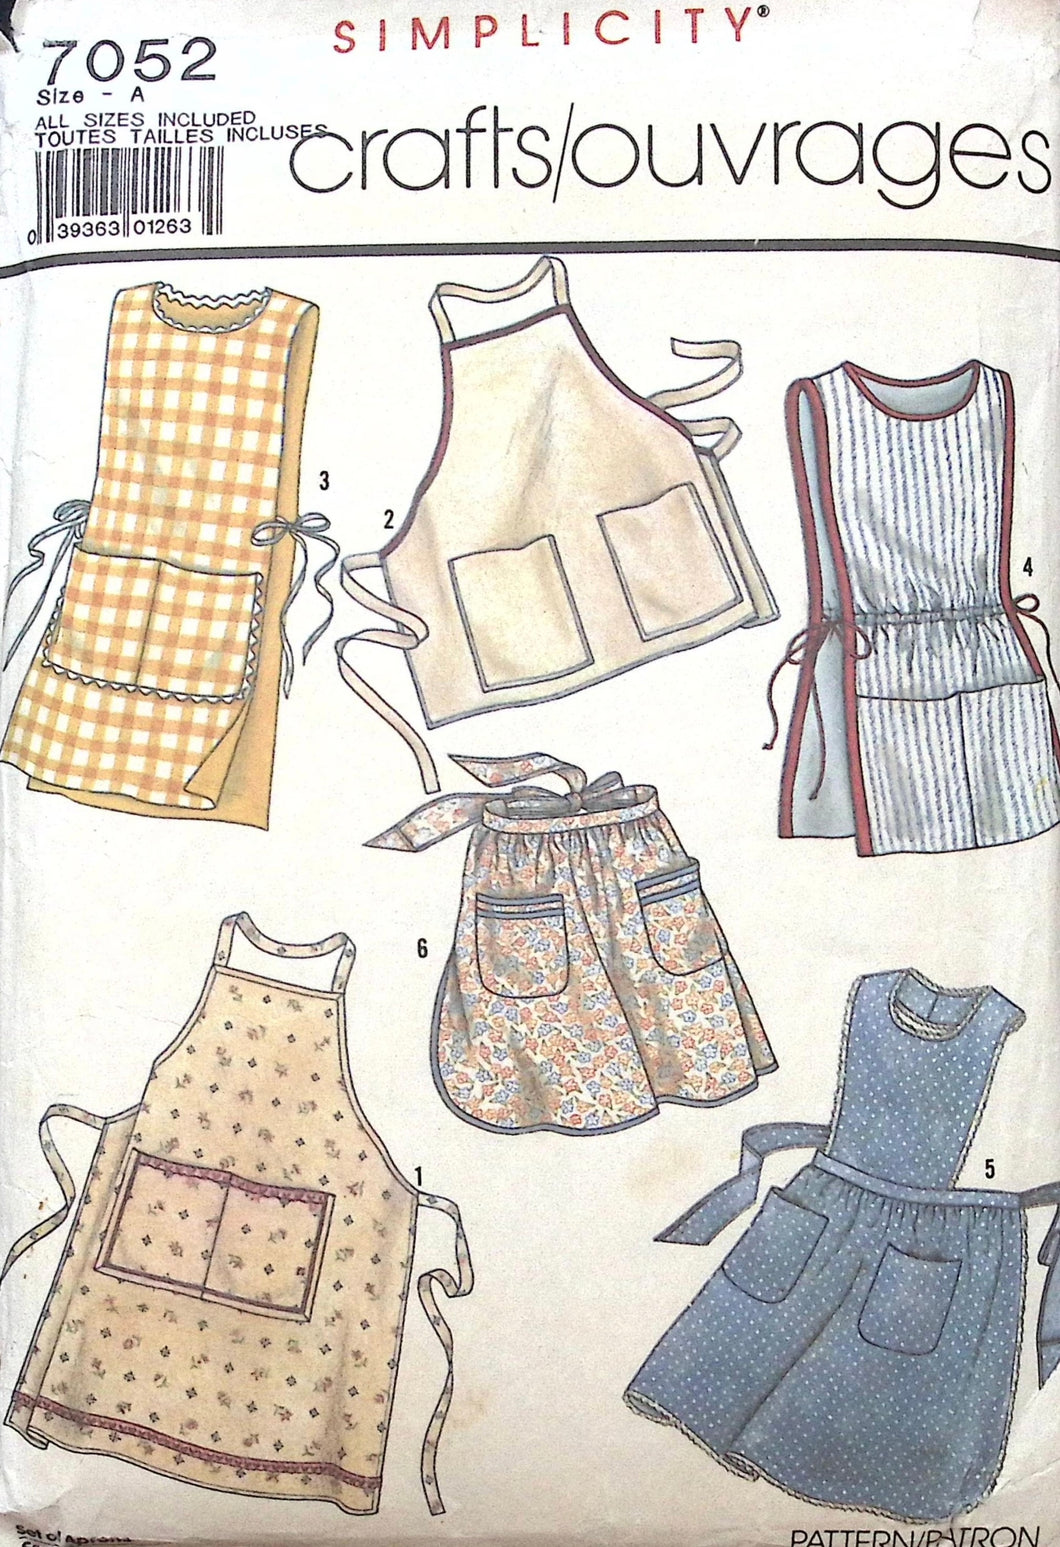 Vintage Sewing Pattern: Simplicity 7052